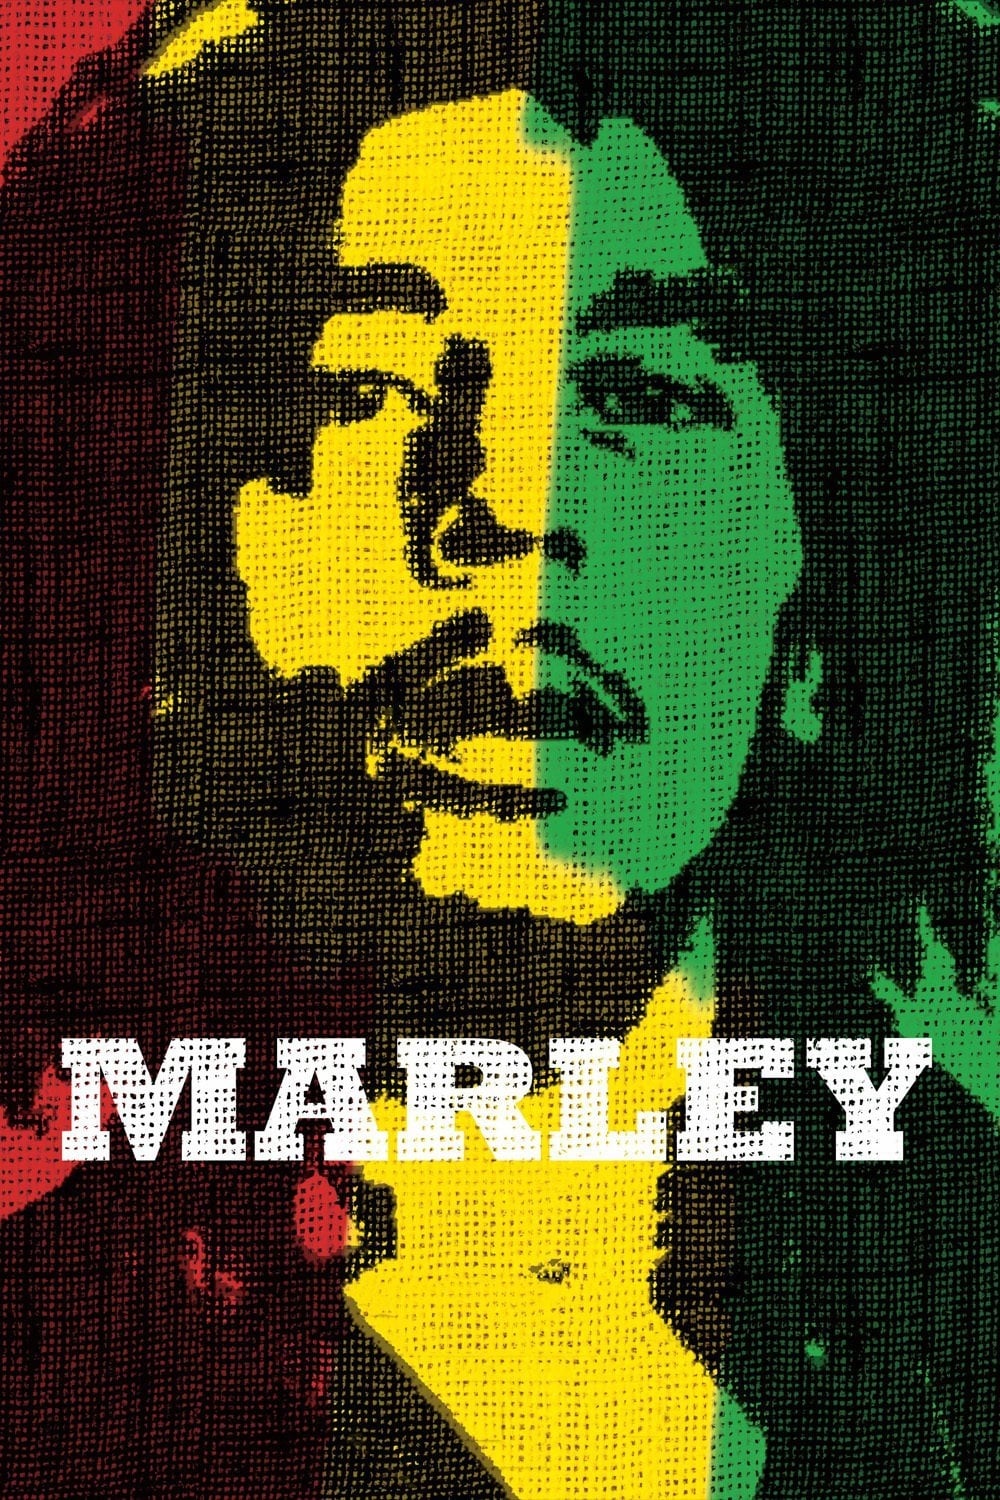 Caratula de Marley (Marley) 